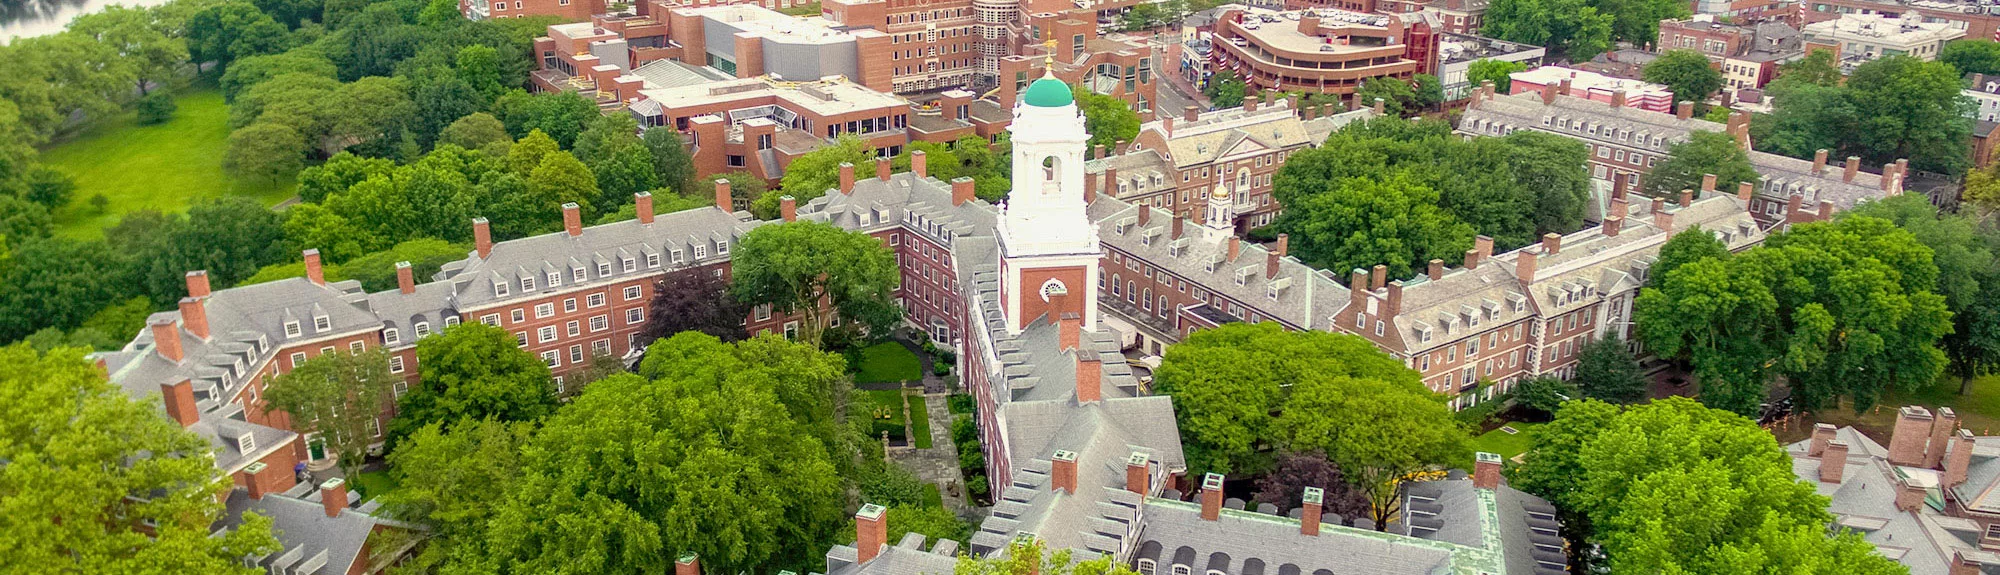 aerial view of Harvard University campus